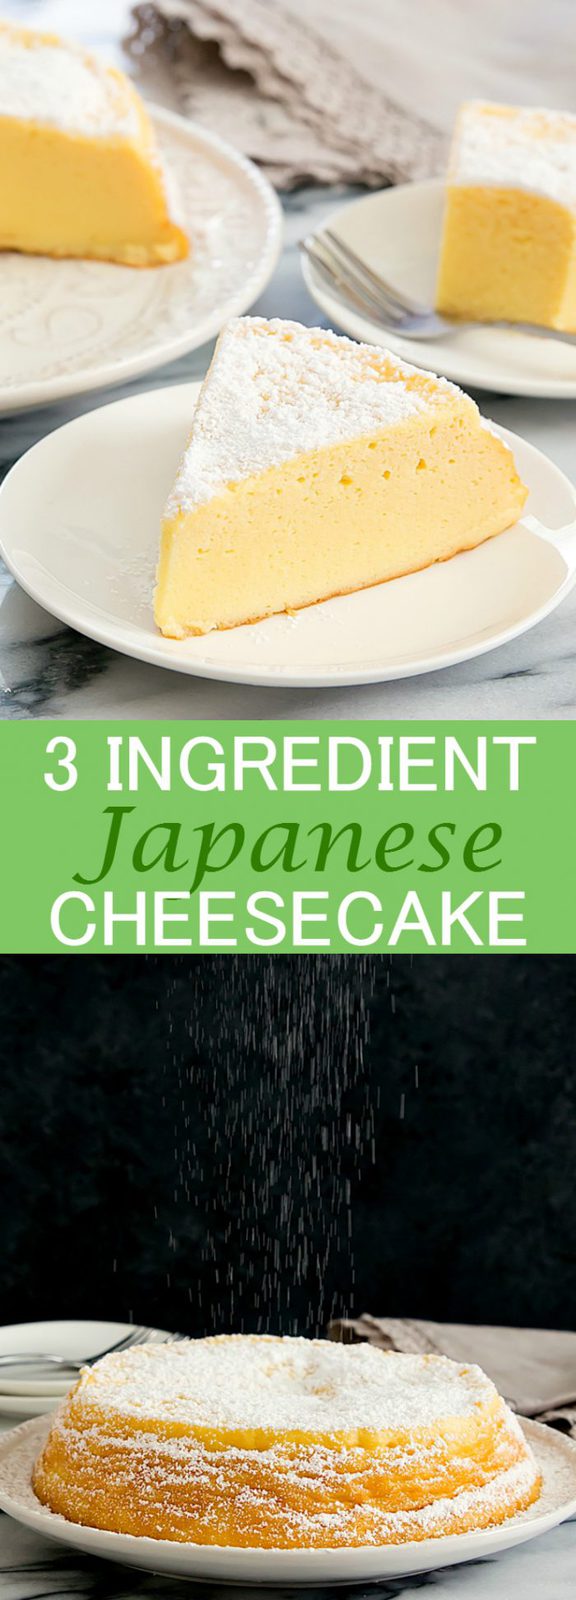 3 Ingredient Japanese Cheesecake